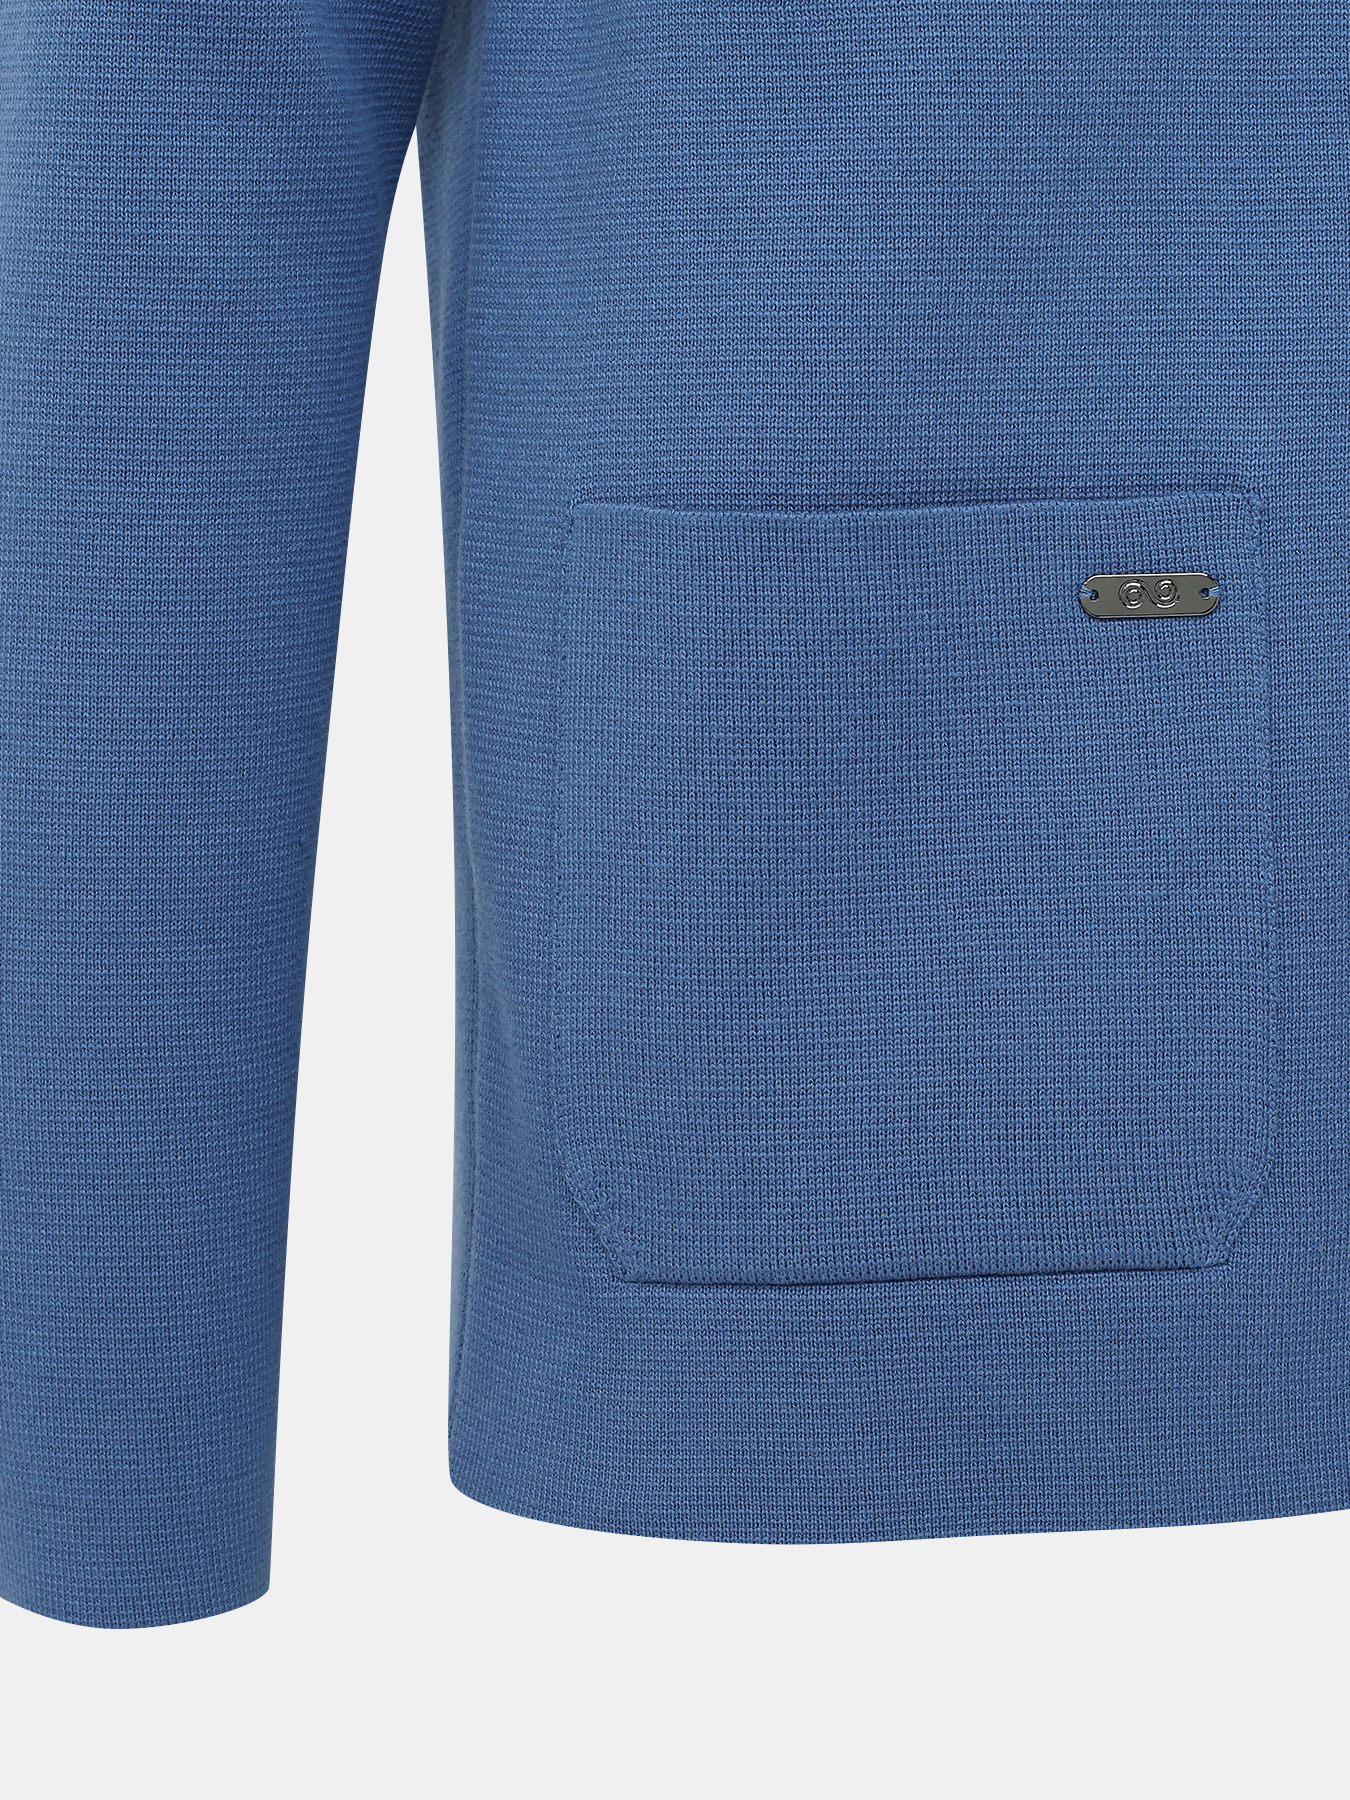 Пиджак Alessandro Manzoni 397142-029, цвет синий, размер 56 - фото 2